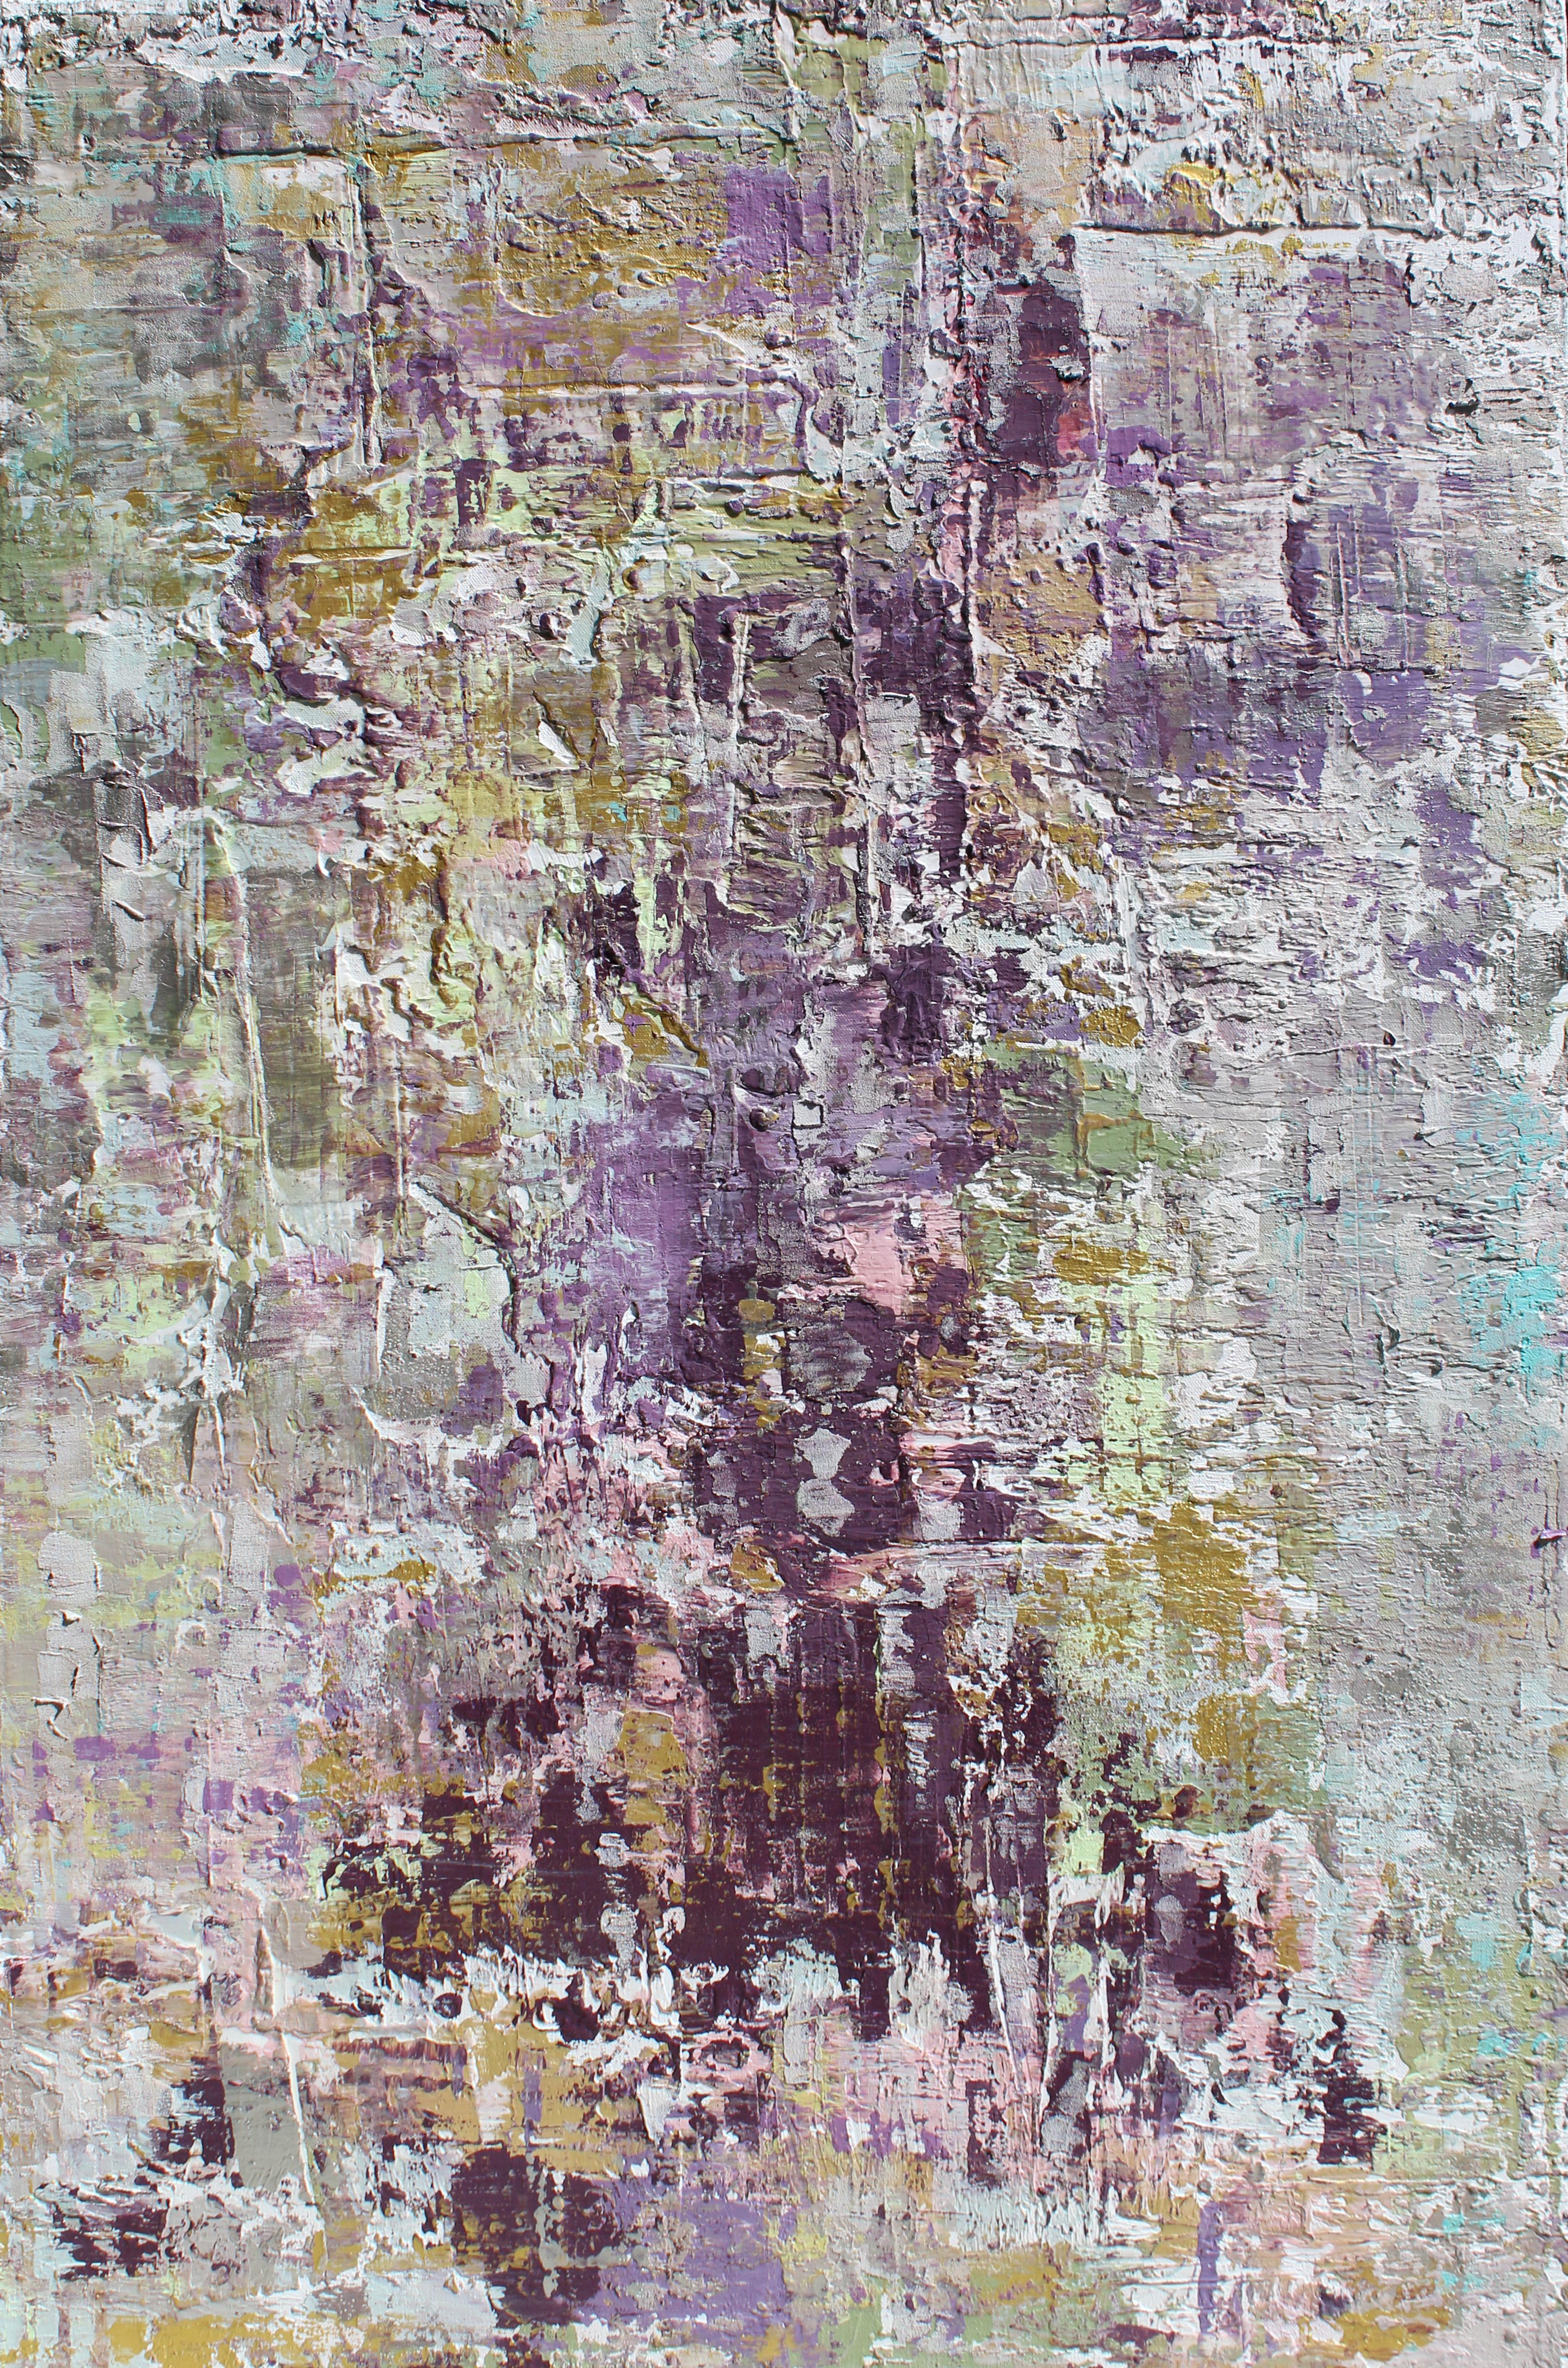 Irena Orlov Interior Painting - Purple Abstract Mixed Medium on Canvas Heavy Textured, Calm Emotions 24x48"